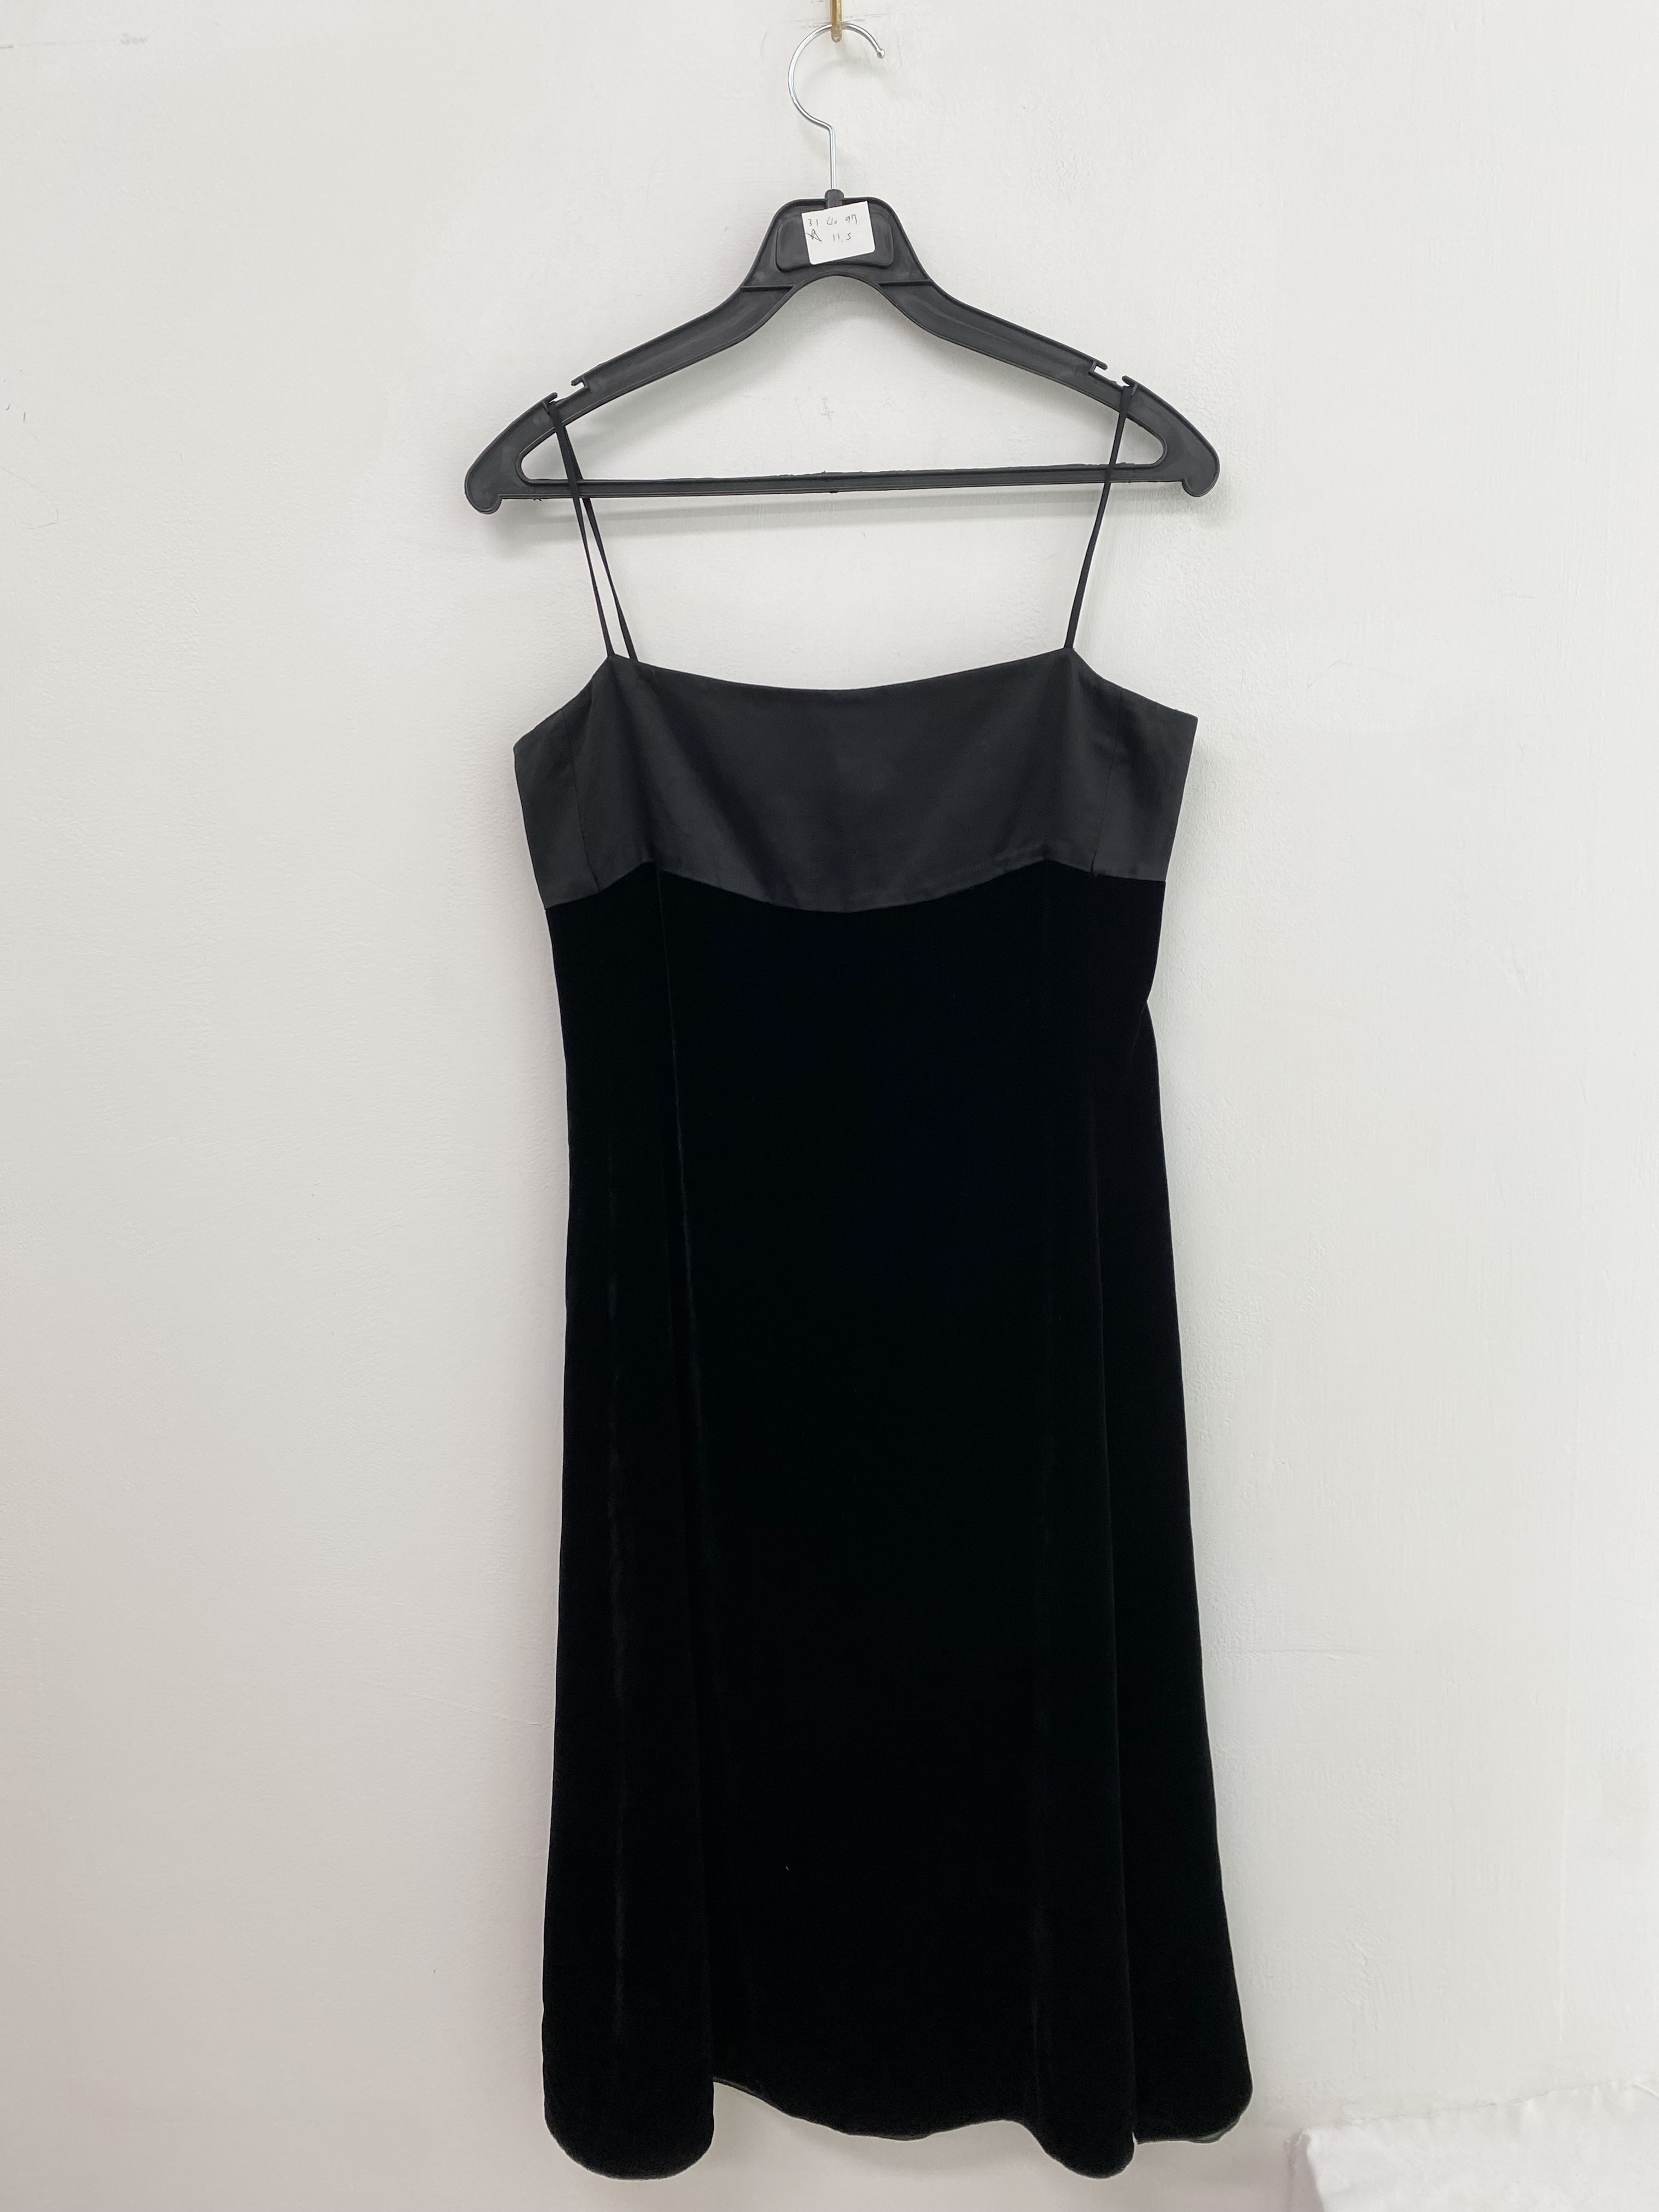 Armani black velvet mix sleeveless dress (made in italy)